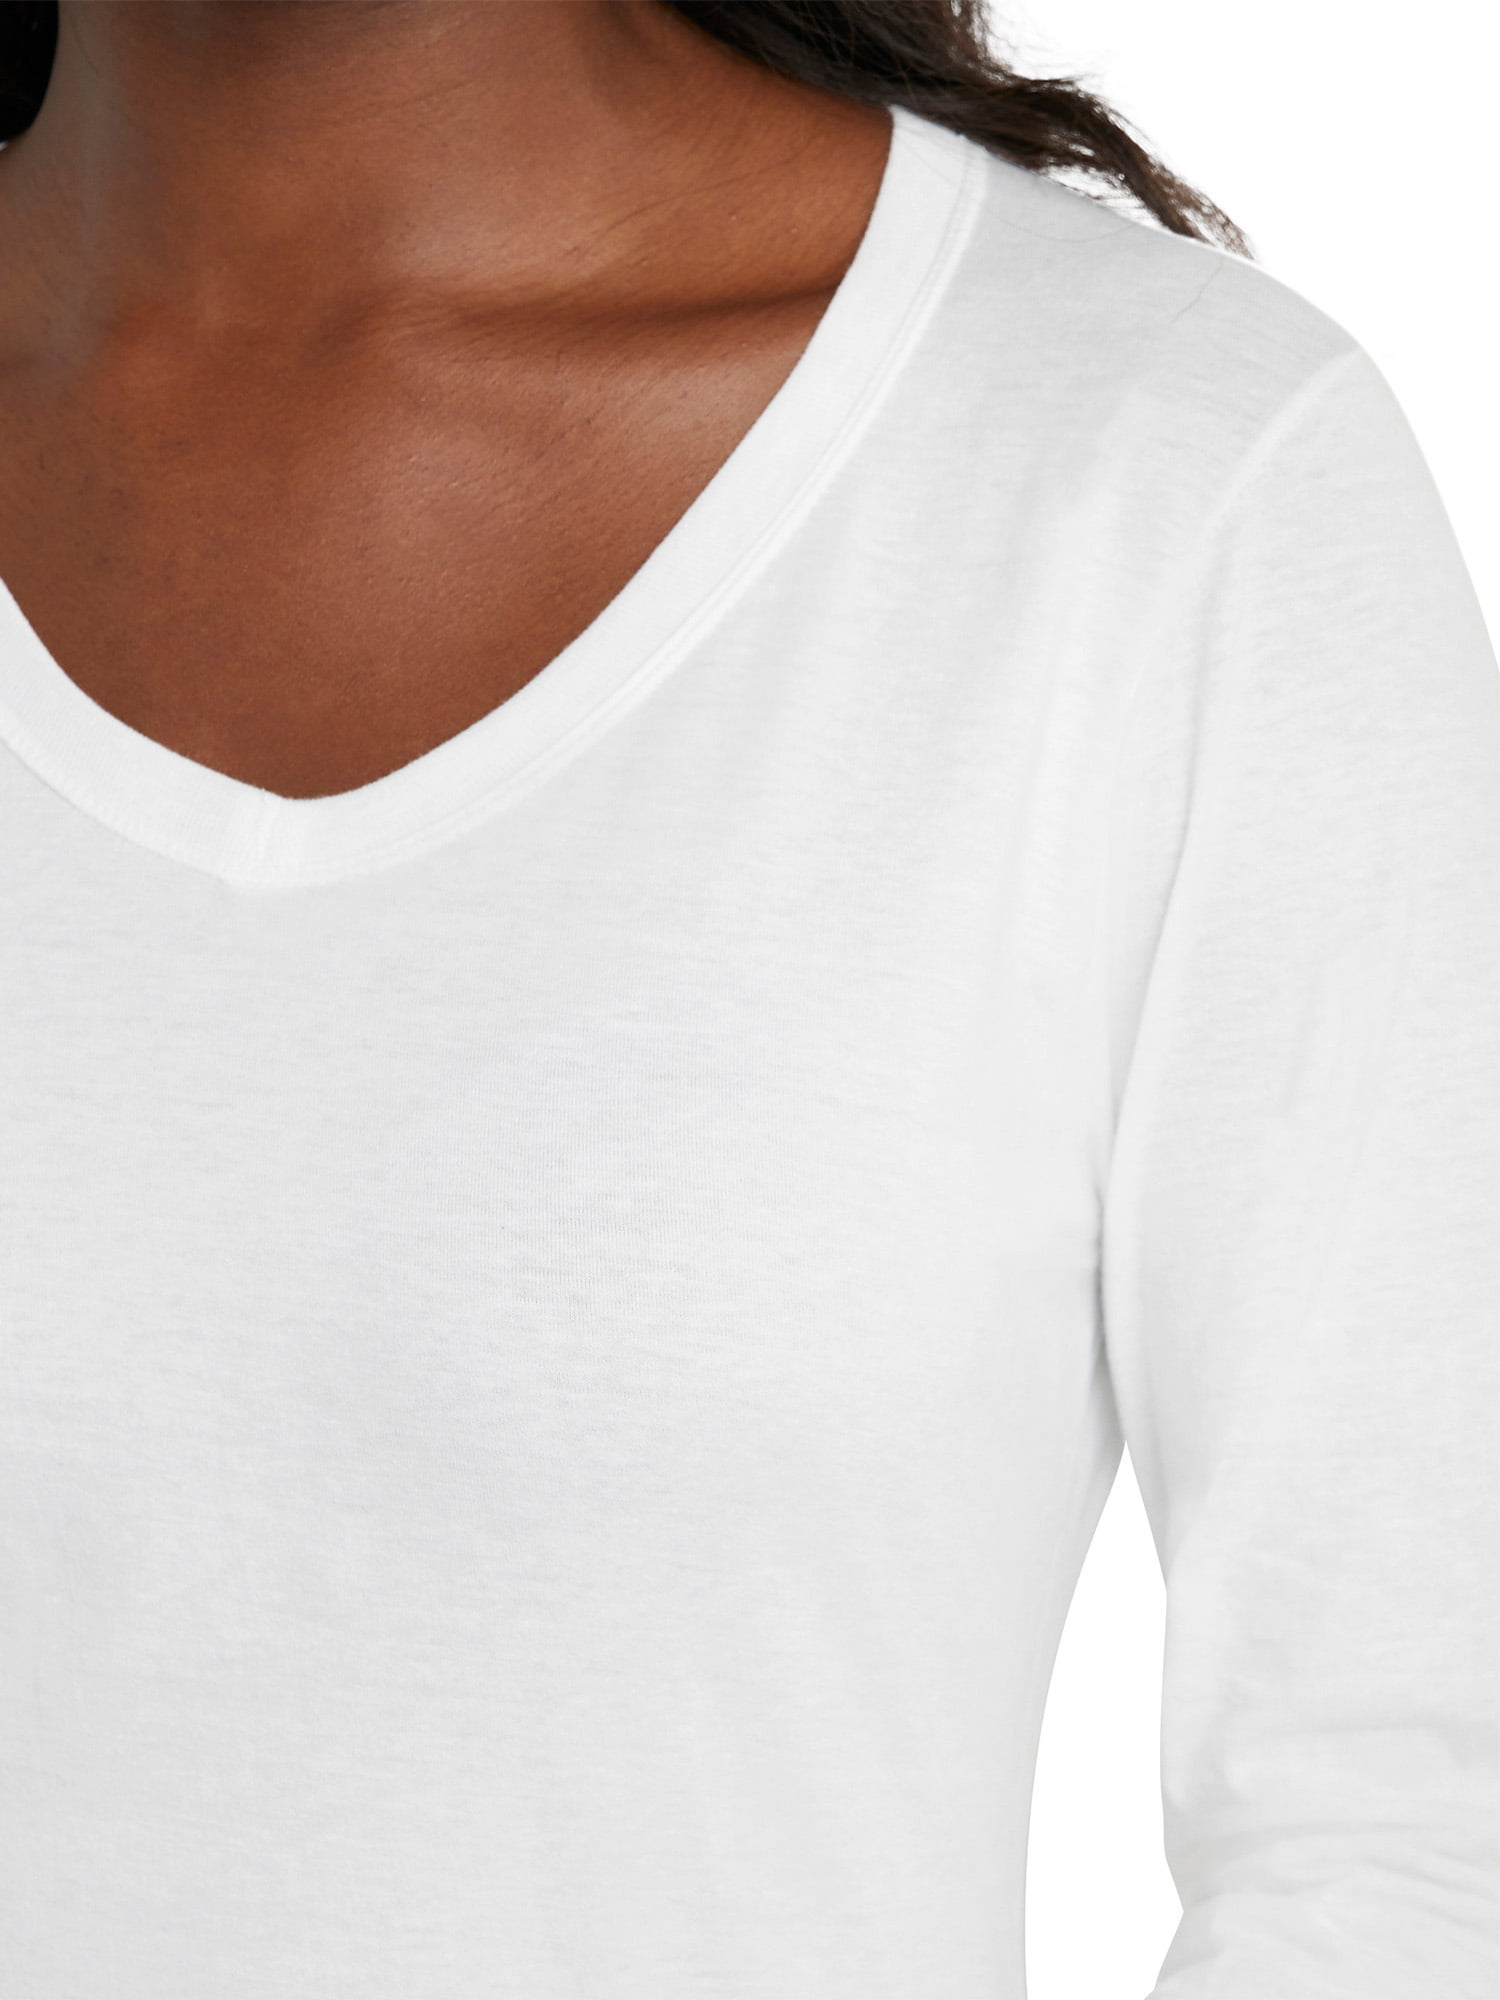 Hanes Originals Women's Twisted Neckline V-Neck T-Shirt, Cotton